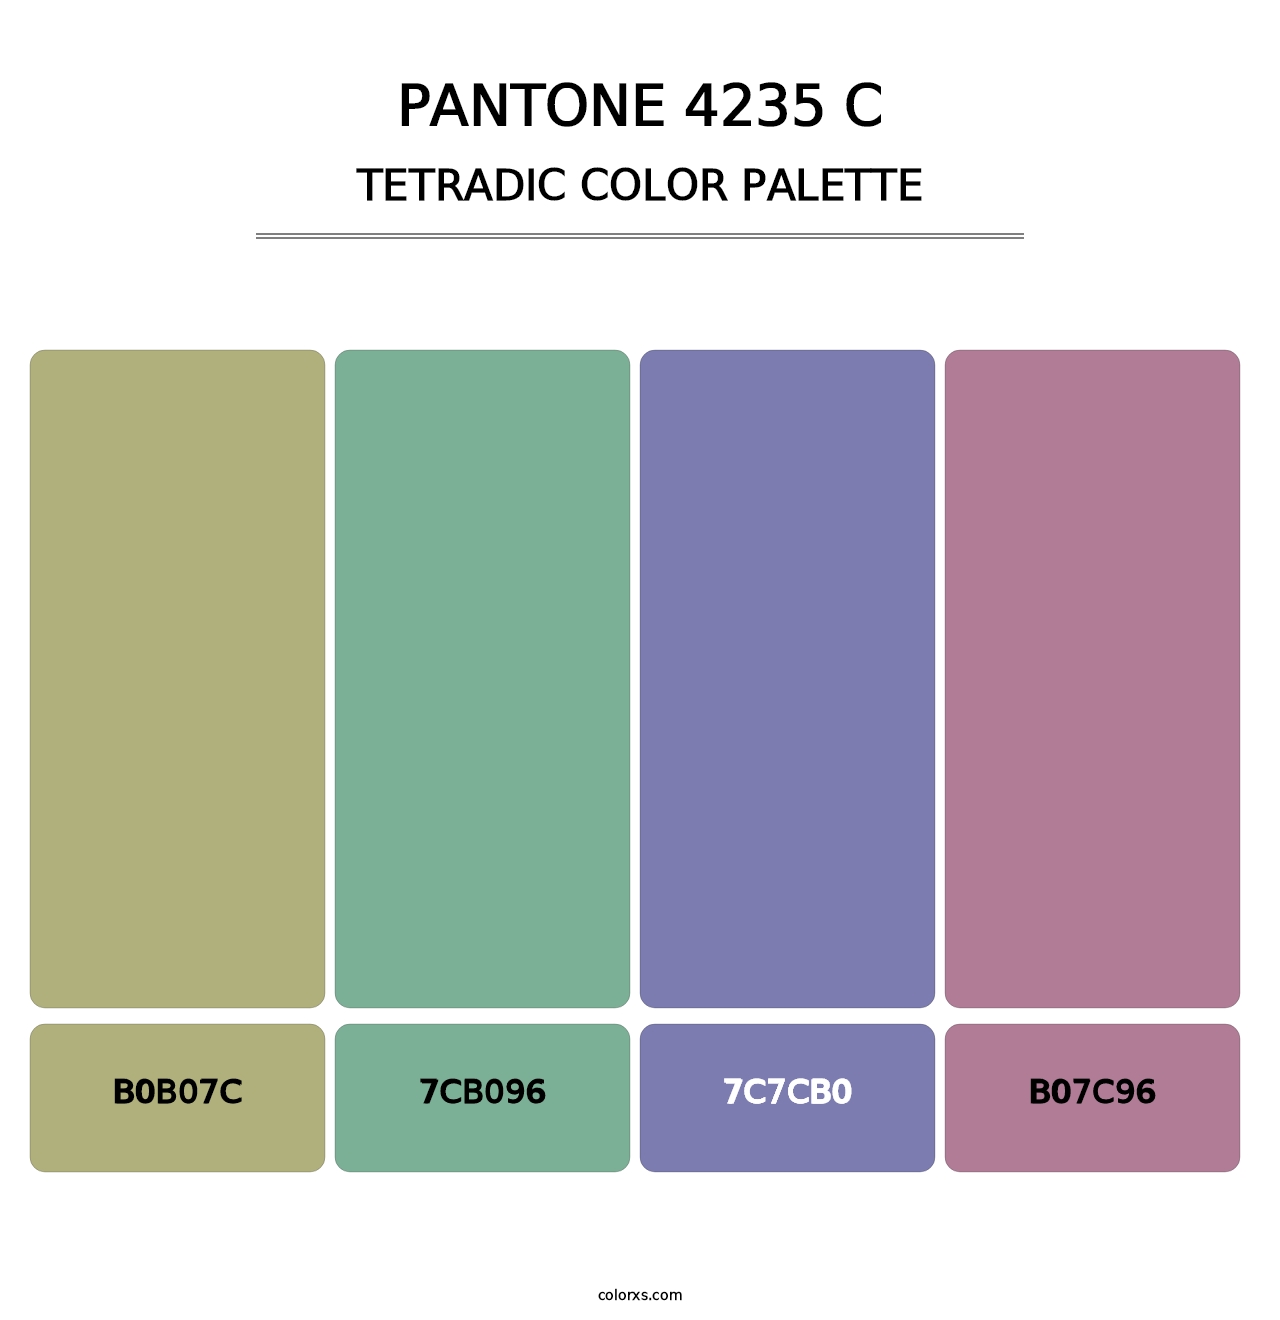 PANTONE 4235 C - Tetradic Color Palette